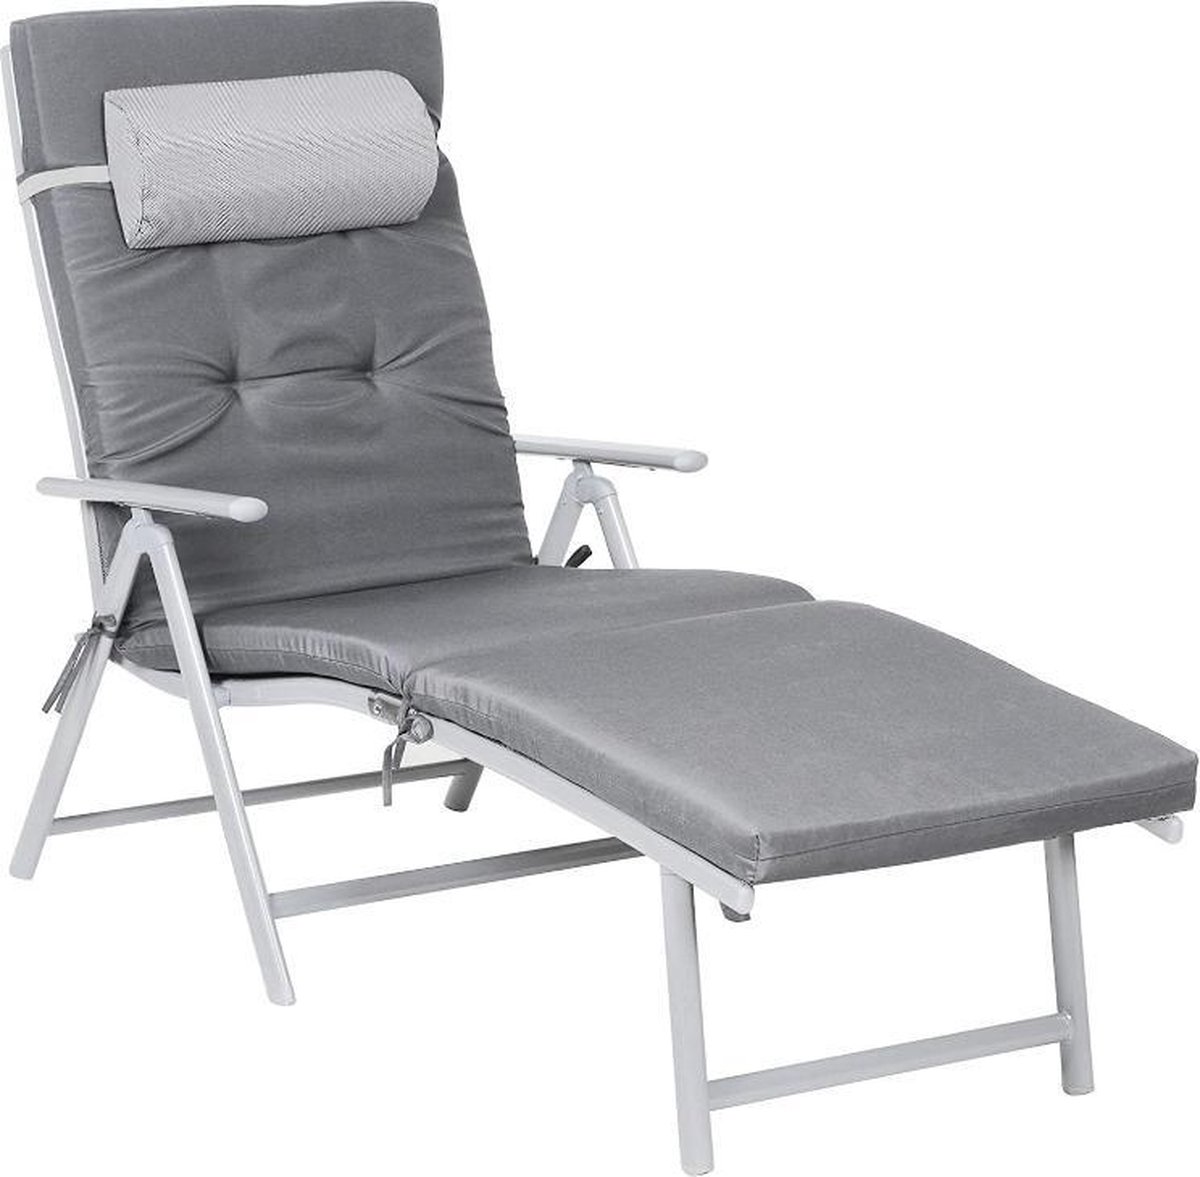 MIRA home - Ligstoel - Inklapbare ligstoel - Tuin - Roestvrij aluminium - Lichtgrijs - 183x60x39